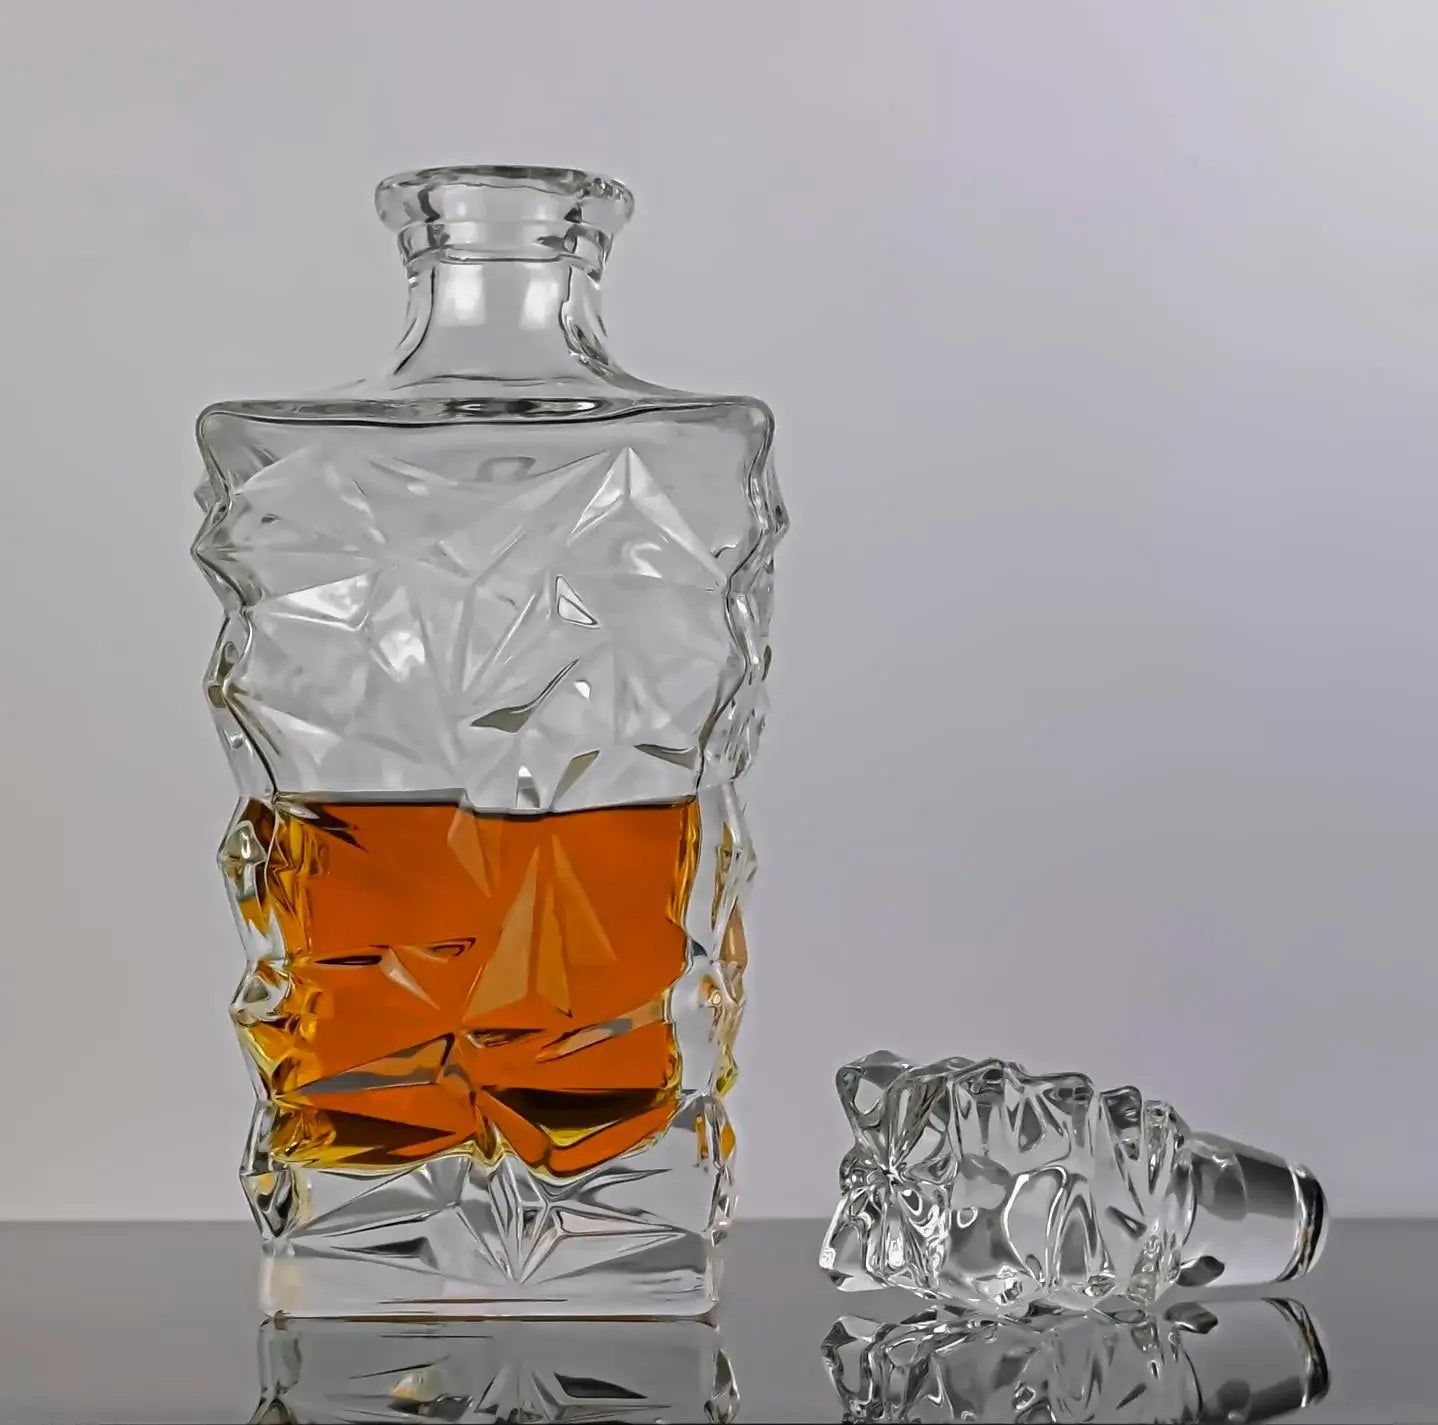 Jagged edge Whisky Decanter Solkatt Designs